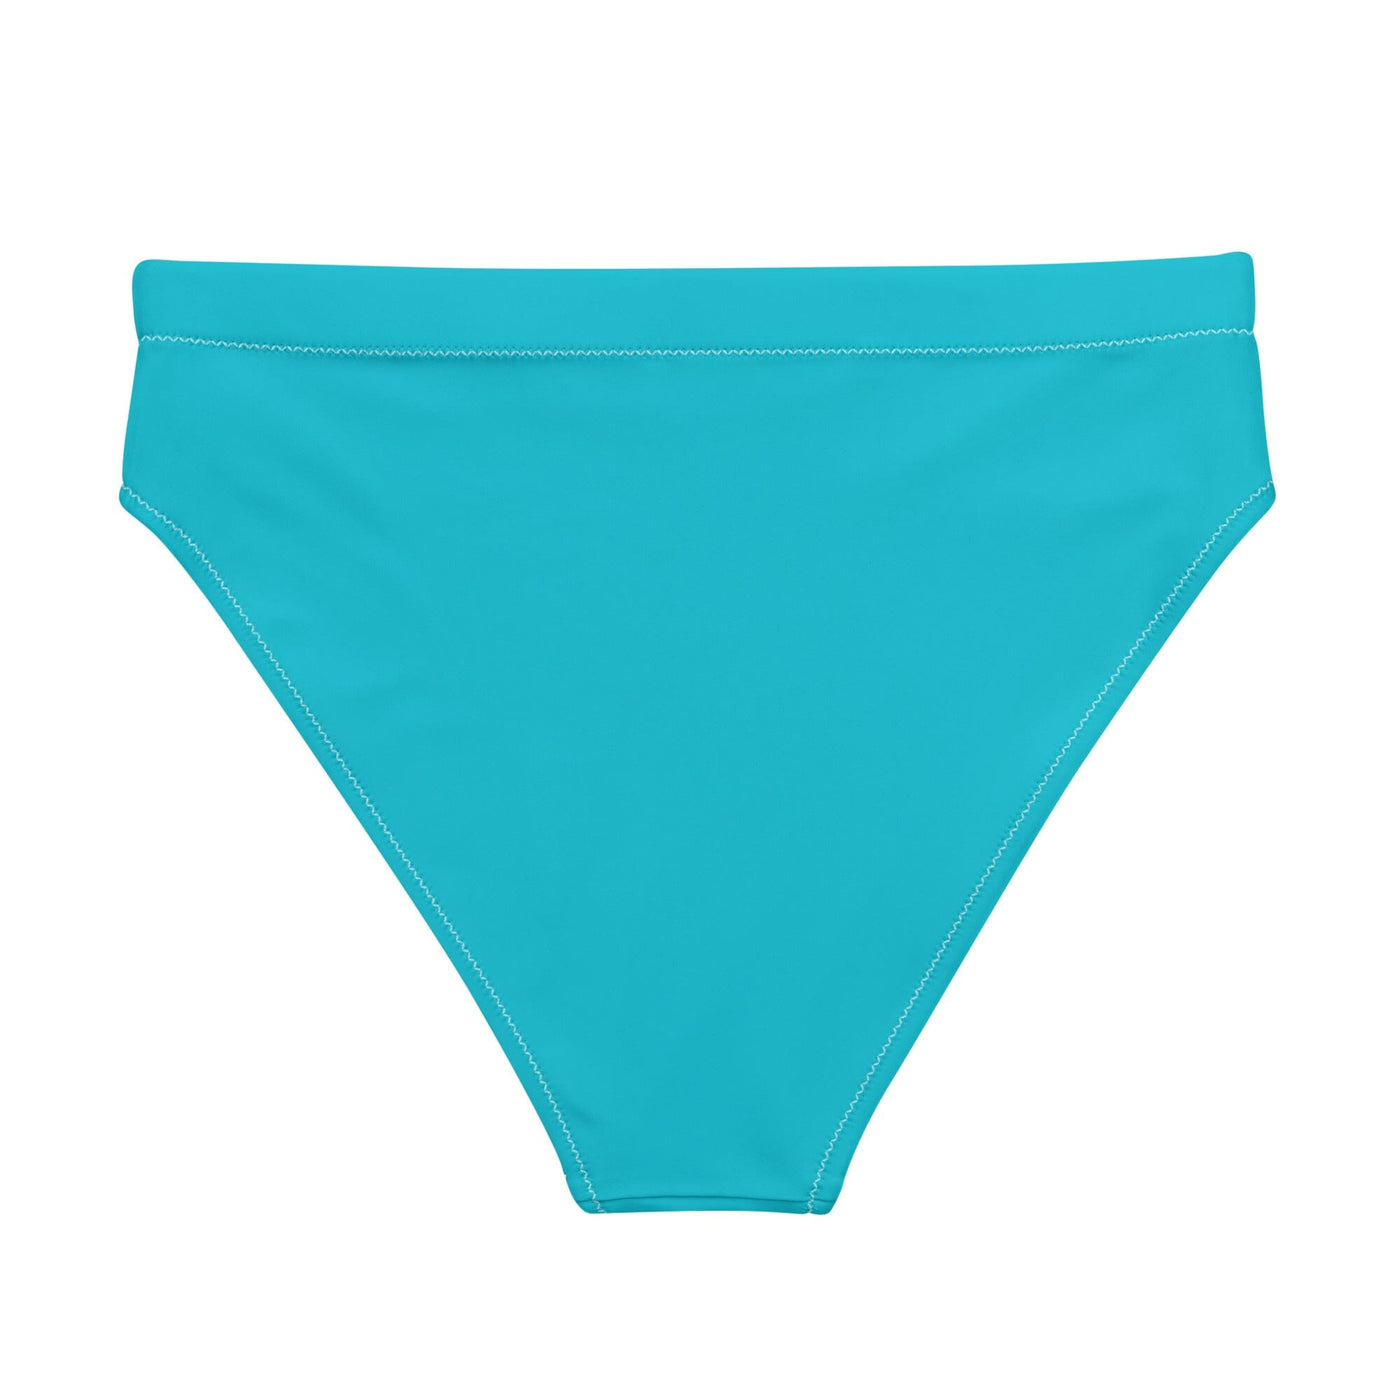 Caribbean Solid Bikini Bottom - Coastal Cool - Swimwear and Beachwear - Recycled fabrics